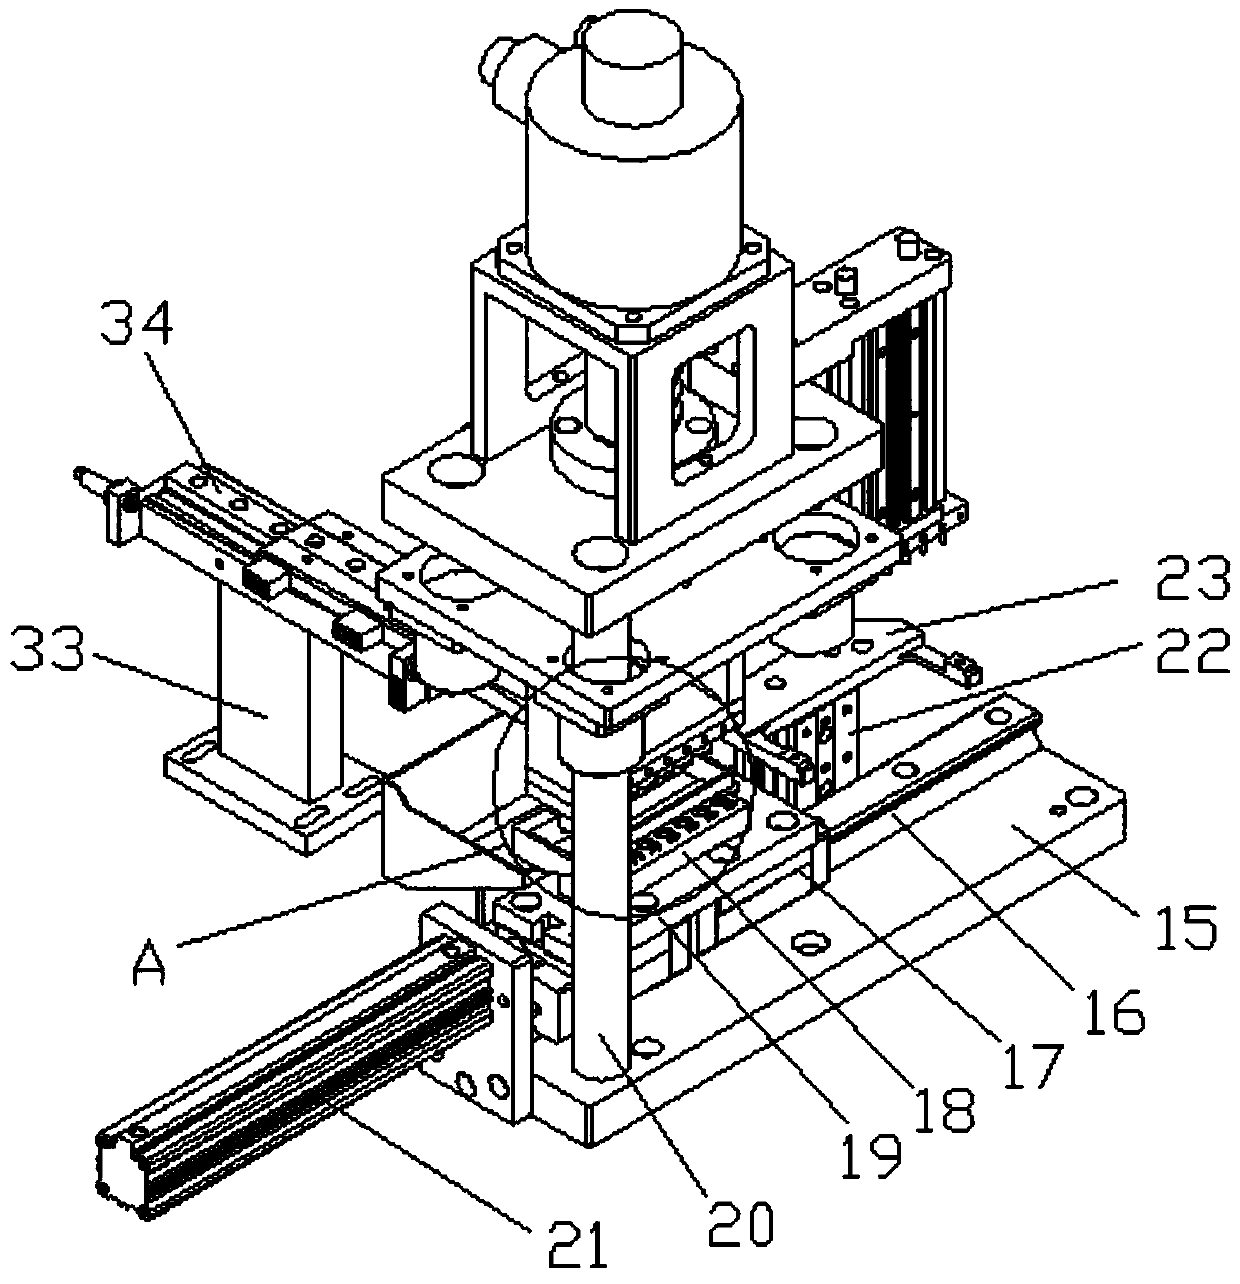 Automatic press-fitting machine of button motor